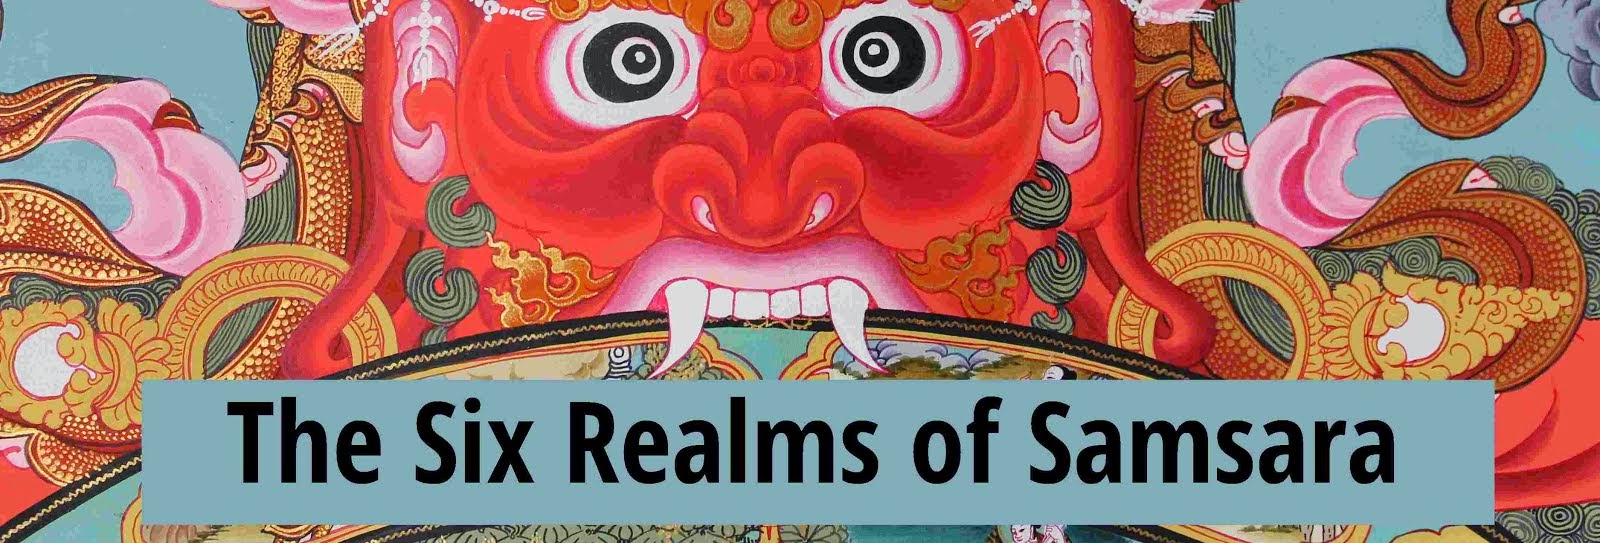 The Six Realms of Samsara